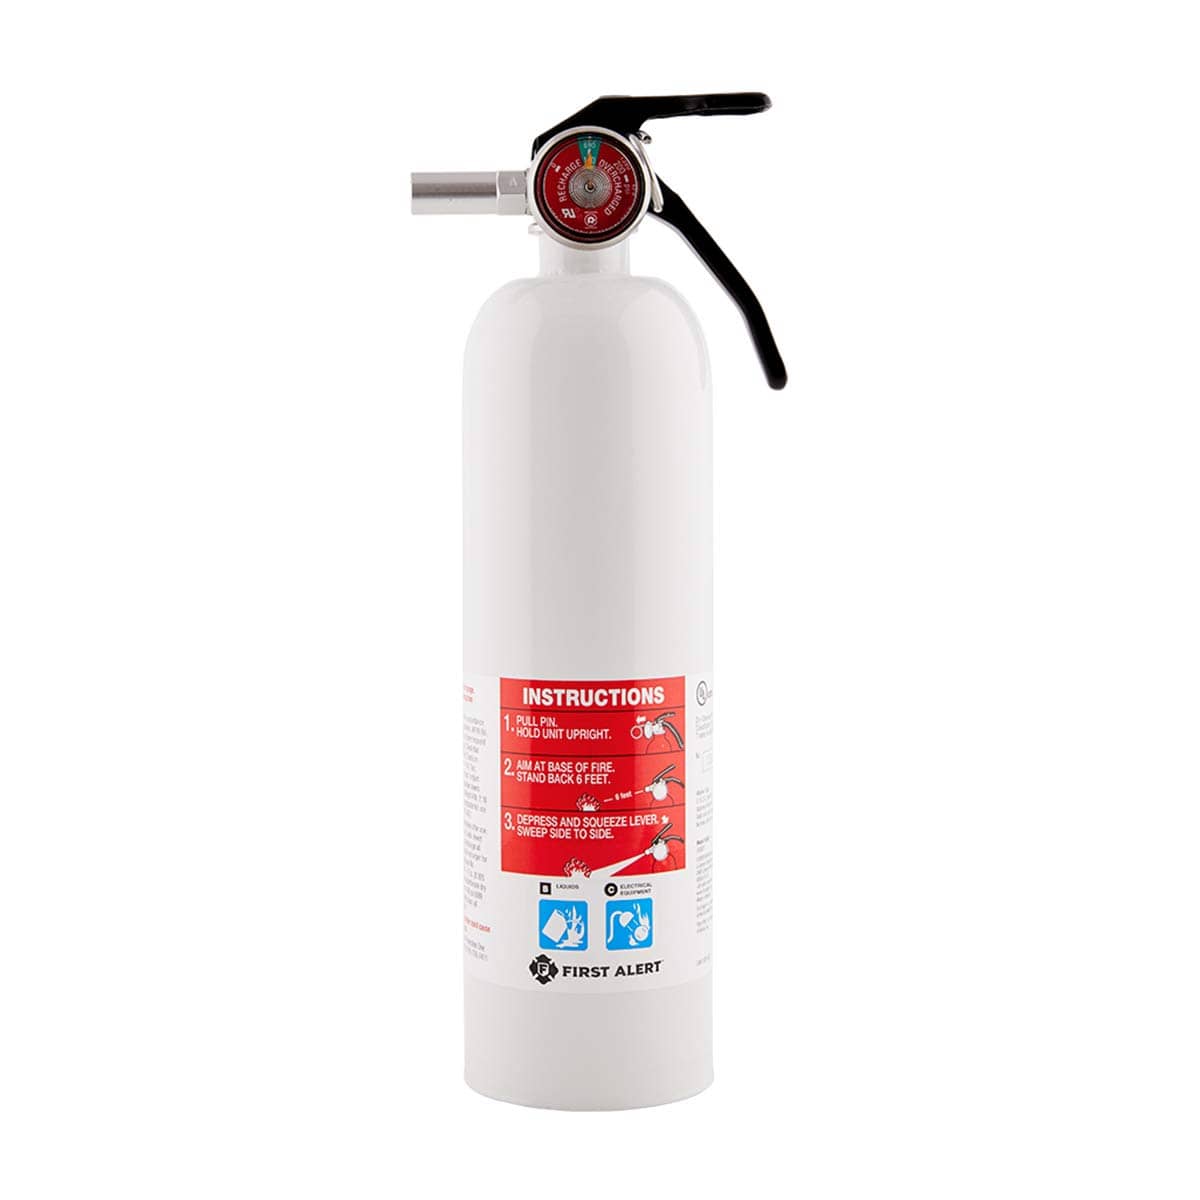 First Alert REC5 Fire Extinguisher Best for travel